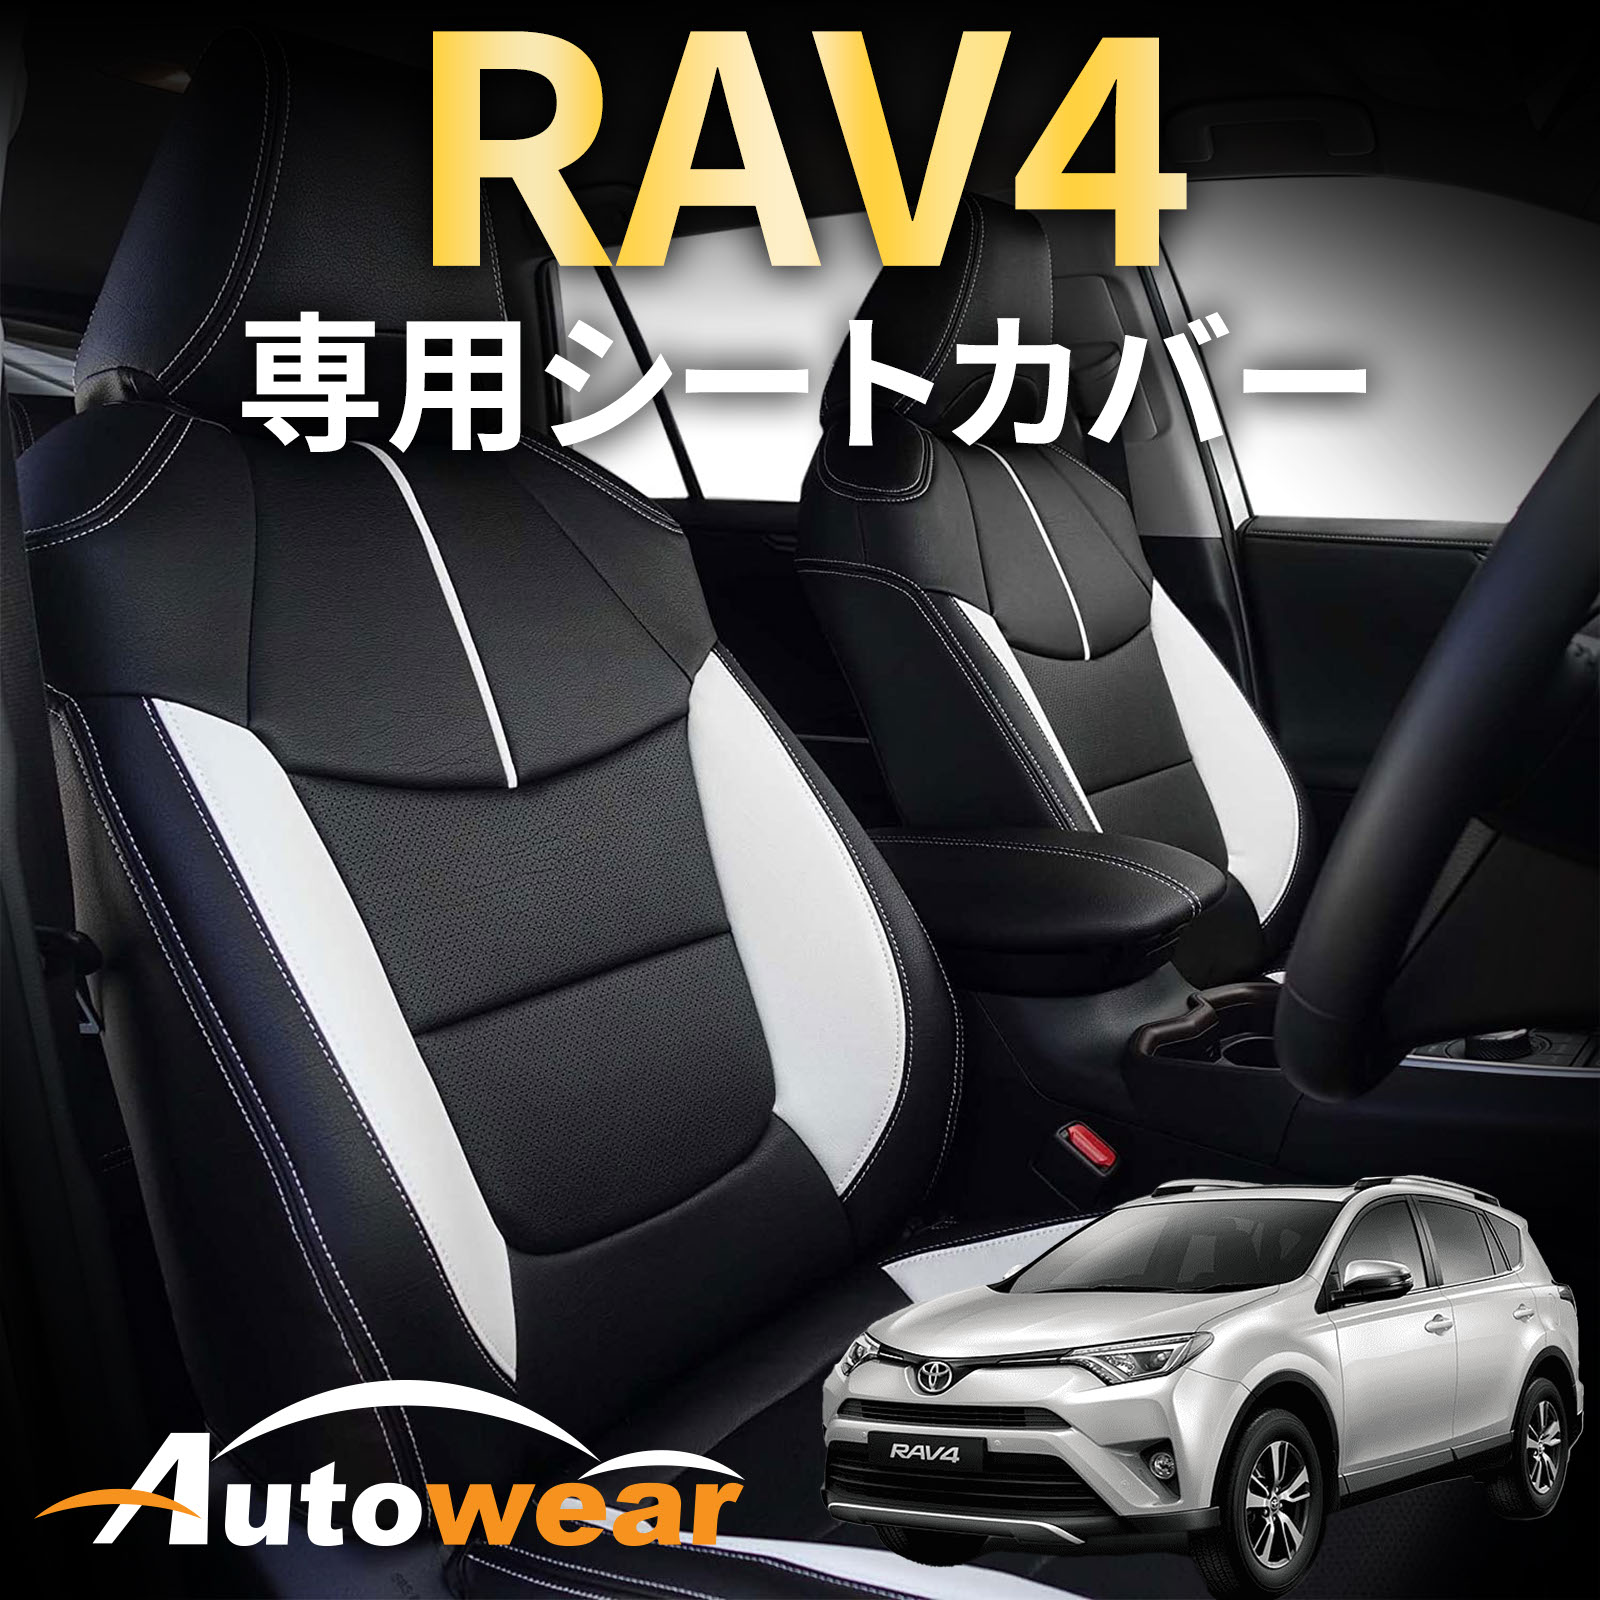 【楽天市場】RAV4 シートカバー、RAV4 50系 専用【 品番:2106 